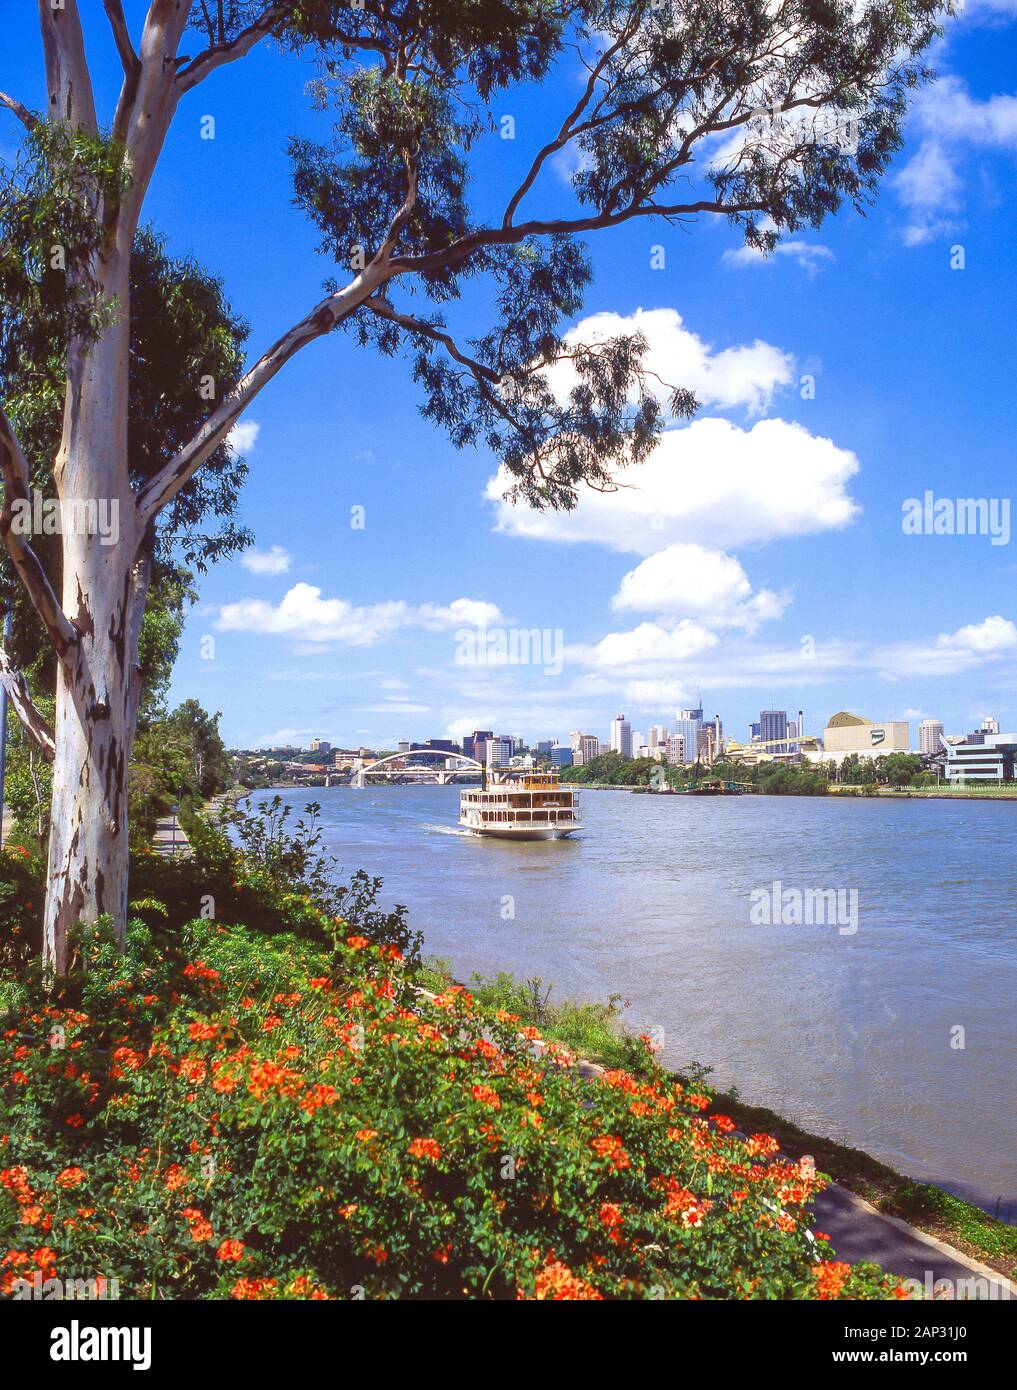 'Kookaburra Queen' paddle wheeler boat cruise on Brisbane River, Brisbane, Queensland, Australia Stock Photo